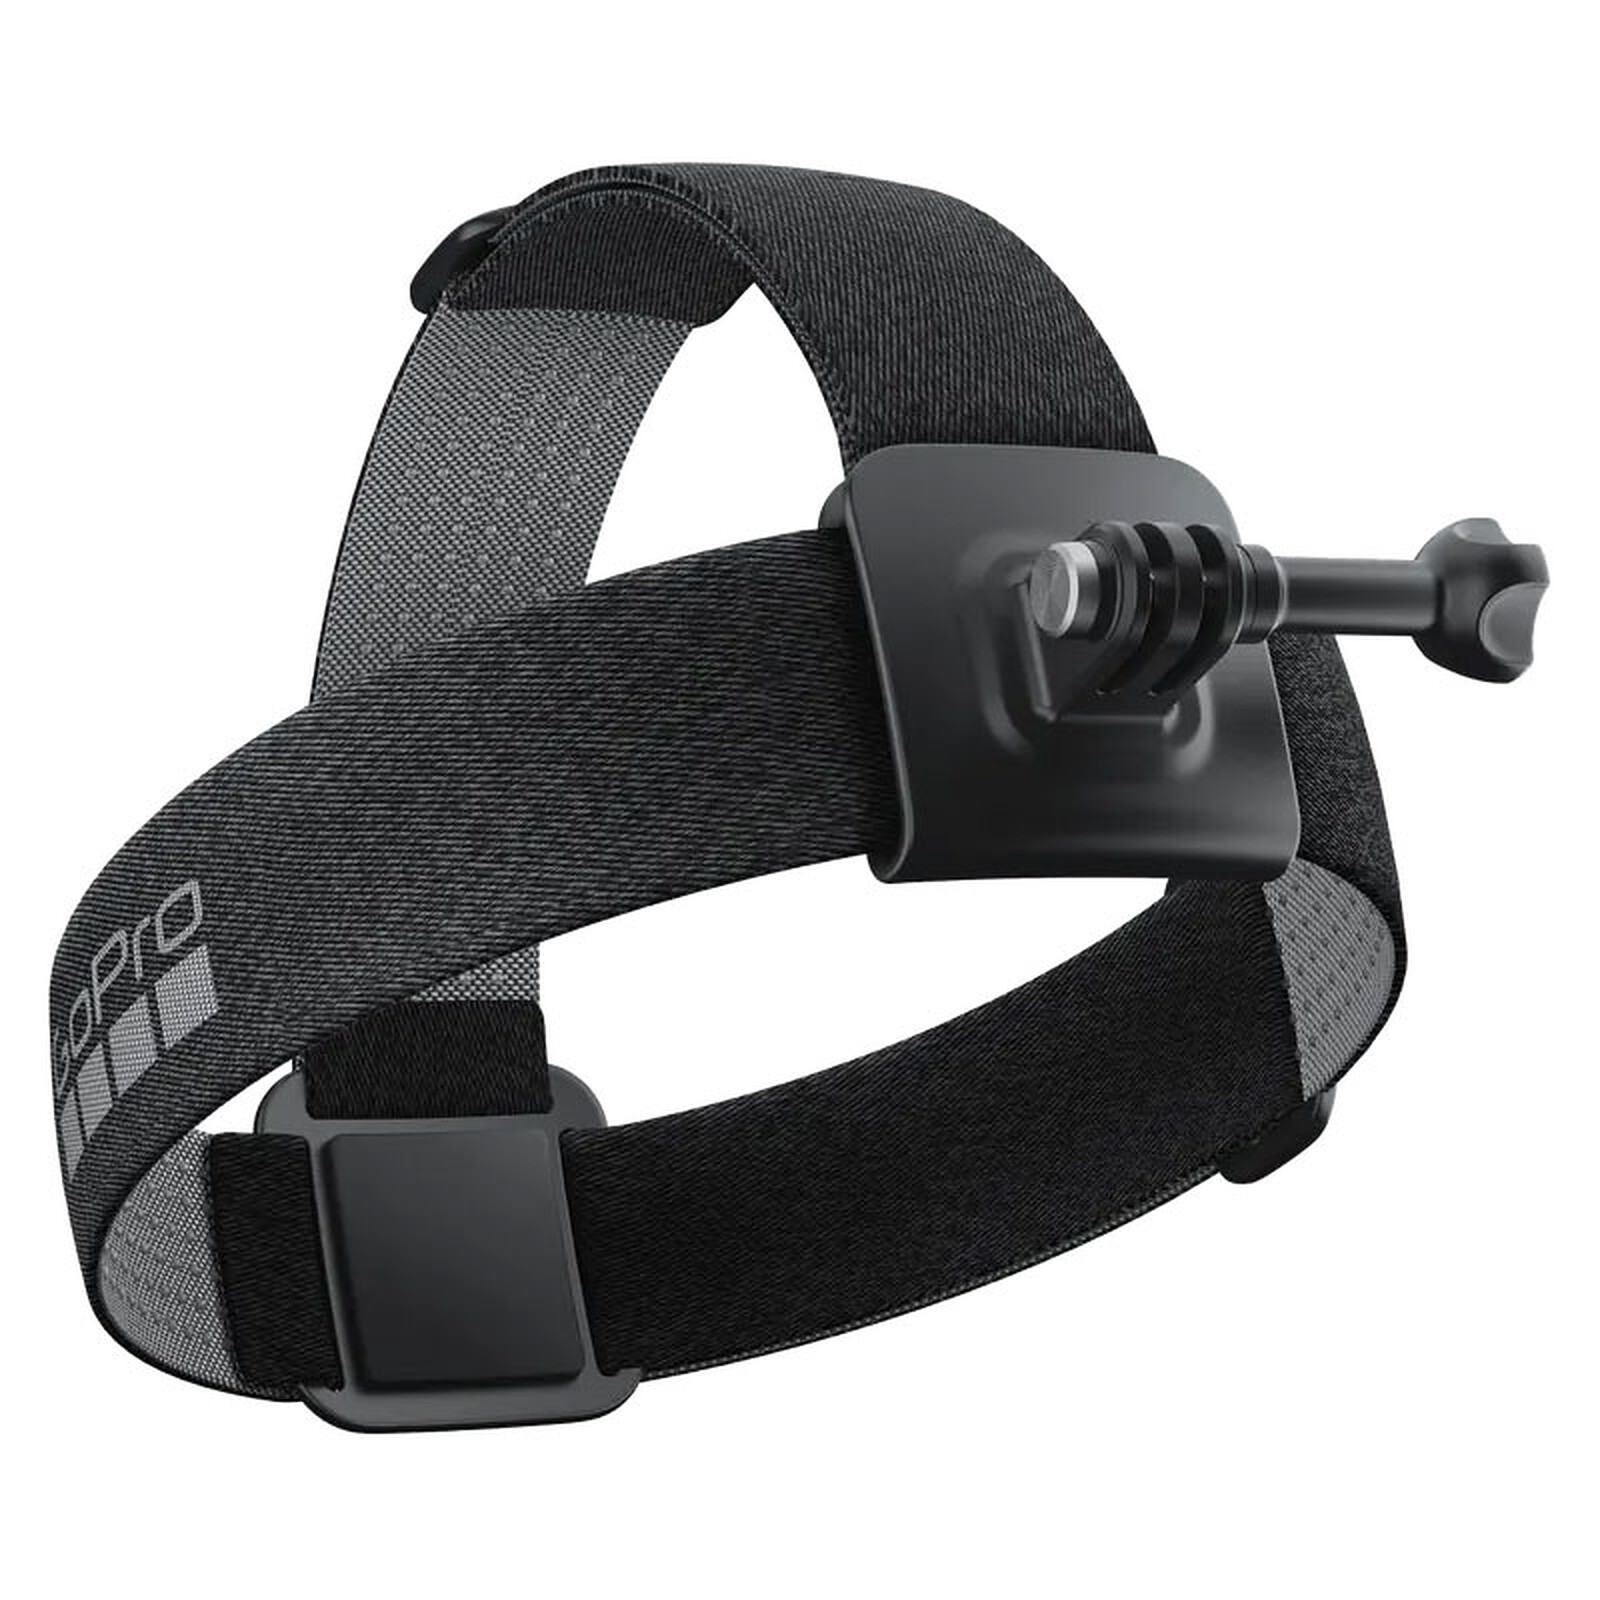 GoPro Head Strap 2.0 - Accessoires caméra sportive - Garantie 3 ans LDLC